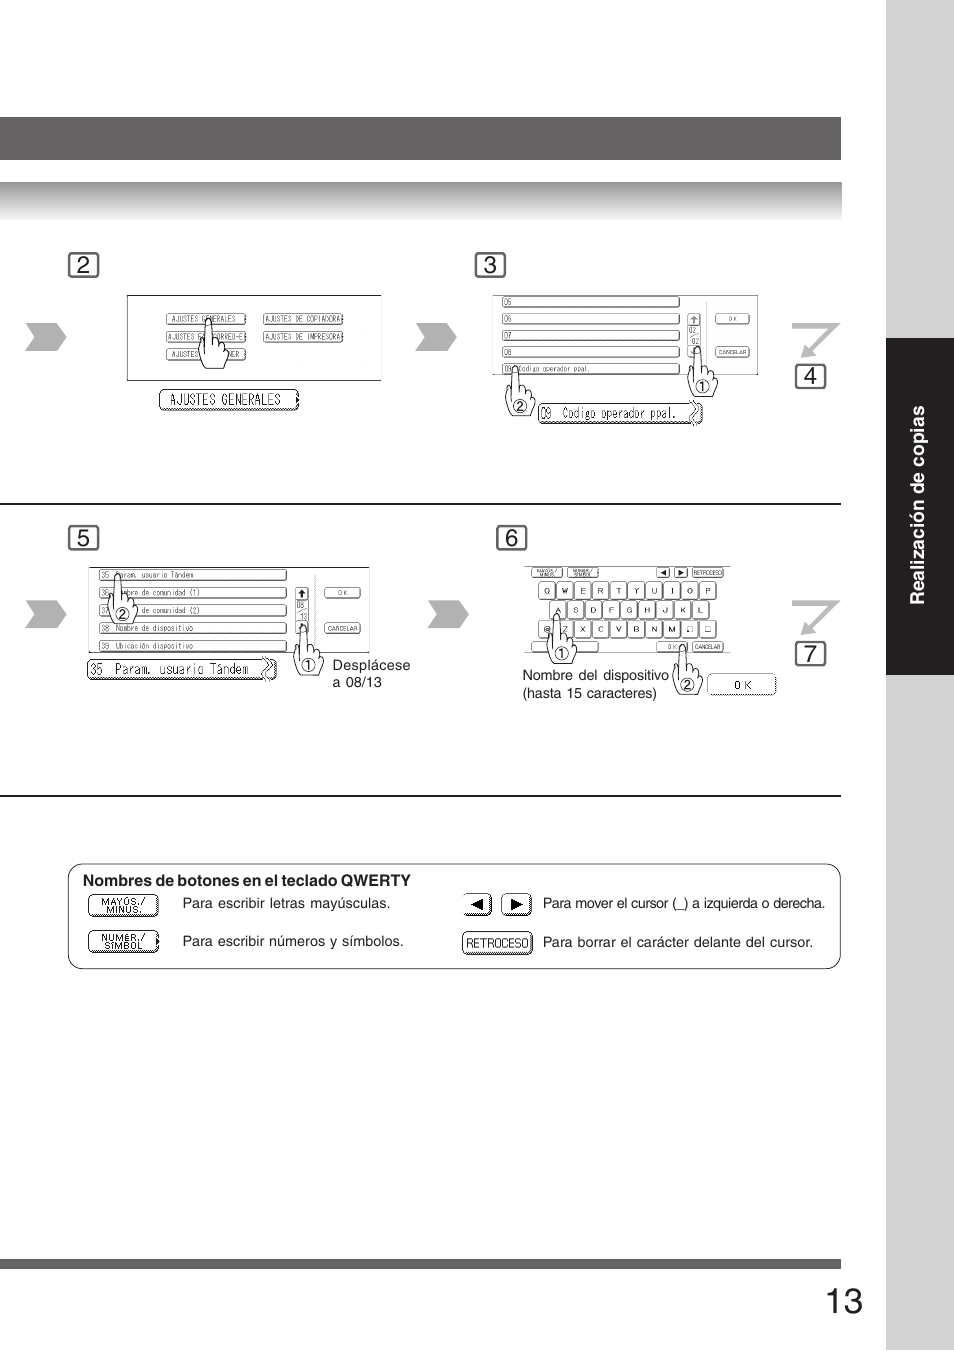 Panasonic DP8035 Manual del usuario | Página 13 / 92